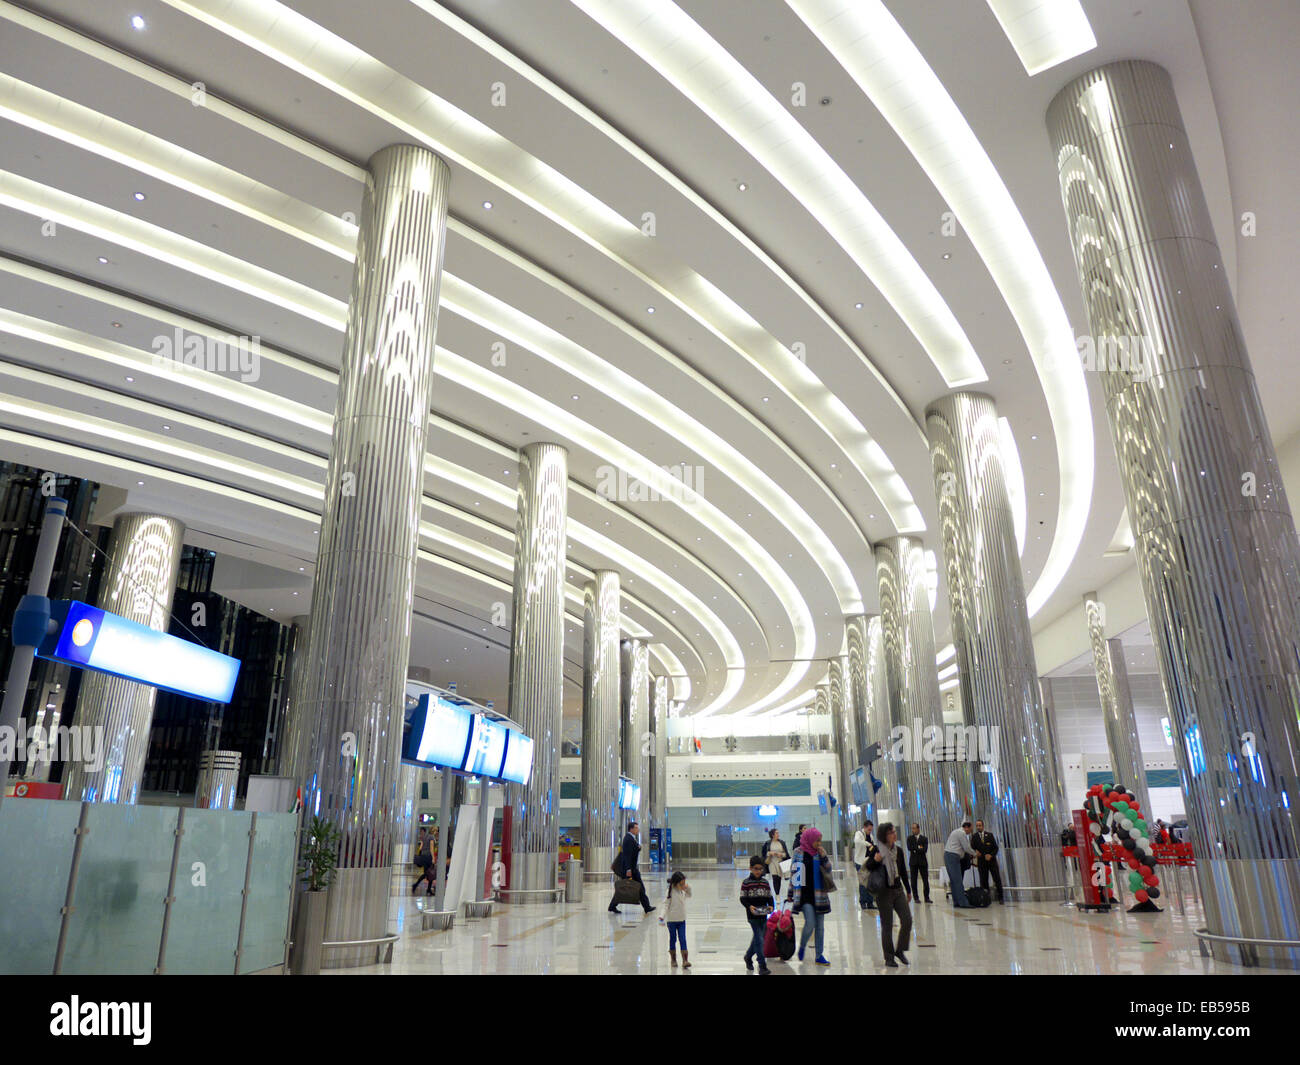 UAE Dubai International Airport architecture modern arrival departure passengers traveller traffic tourism tourist holiday Stock Photo